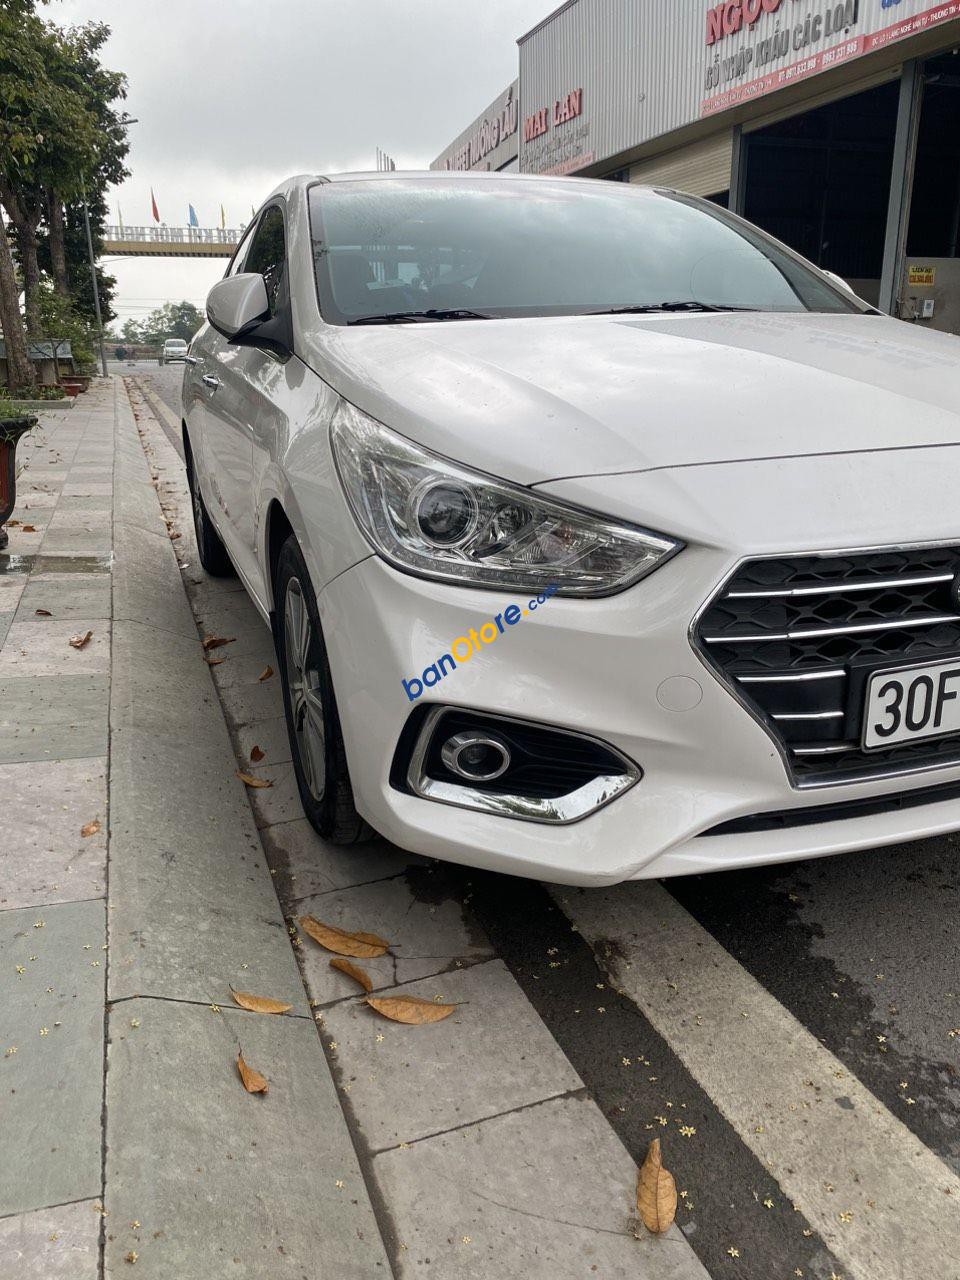 Hyundai Accent 2019 - Hỗ trợ bank 70%